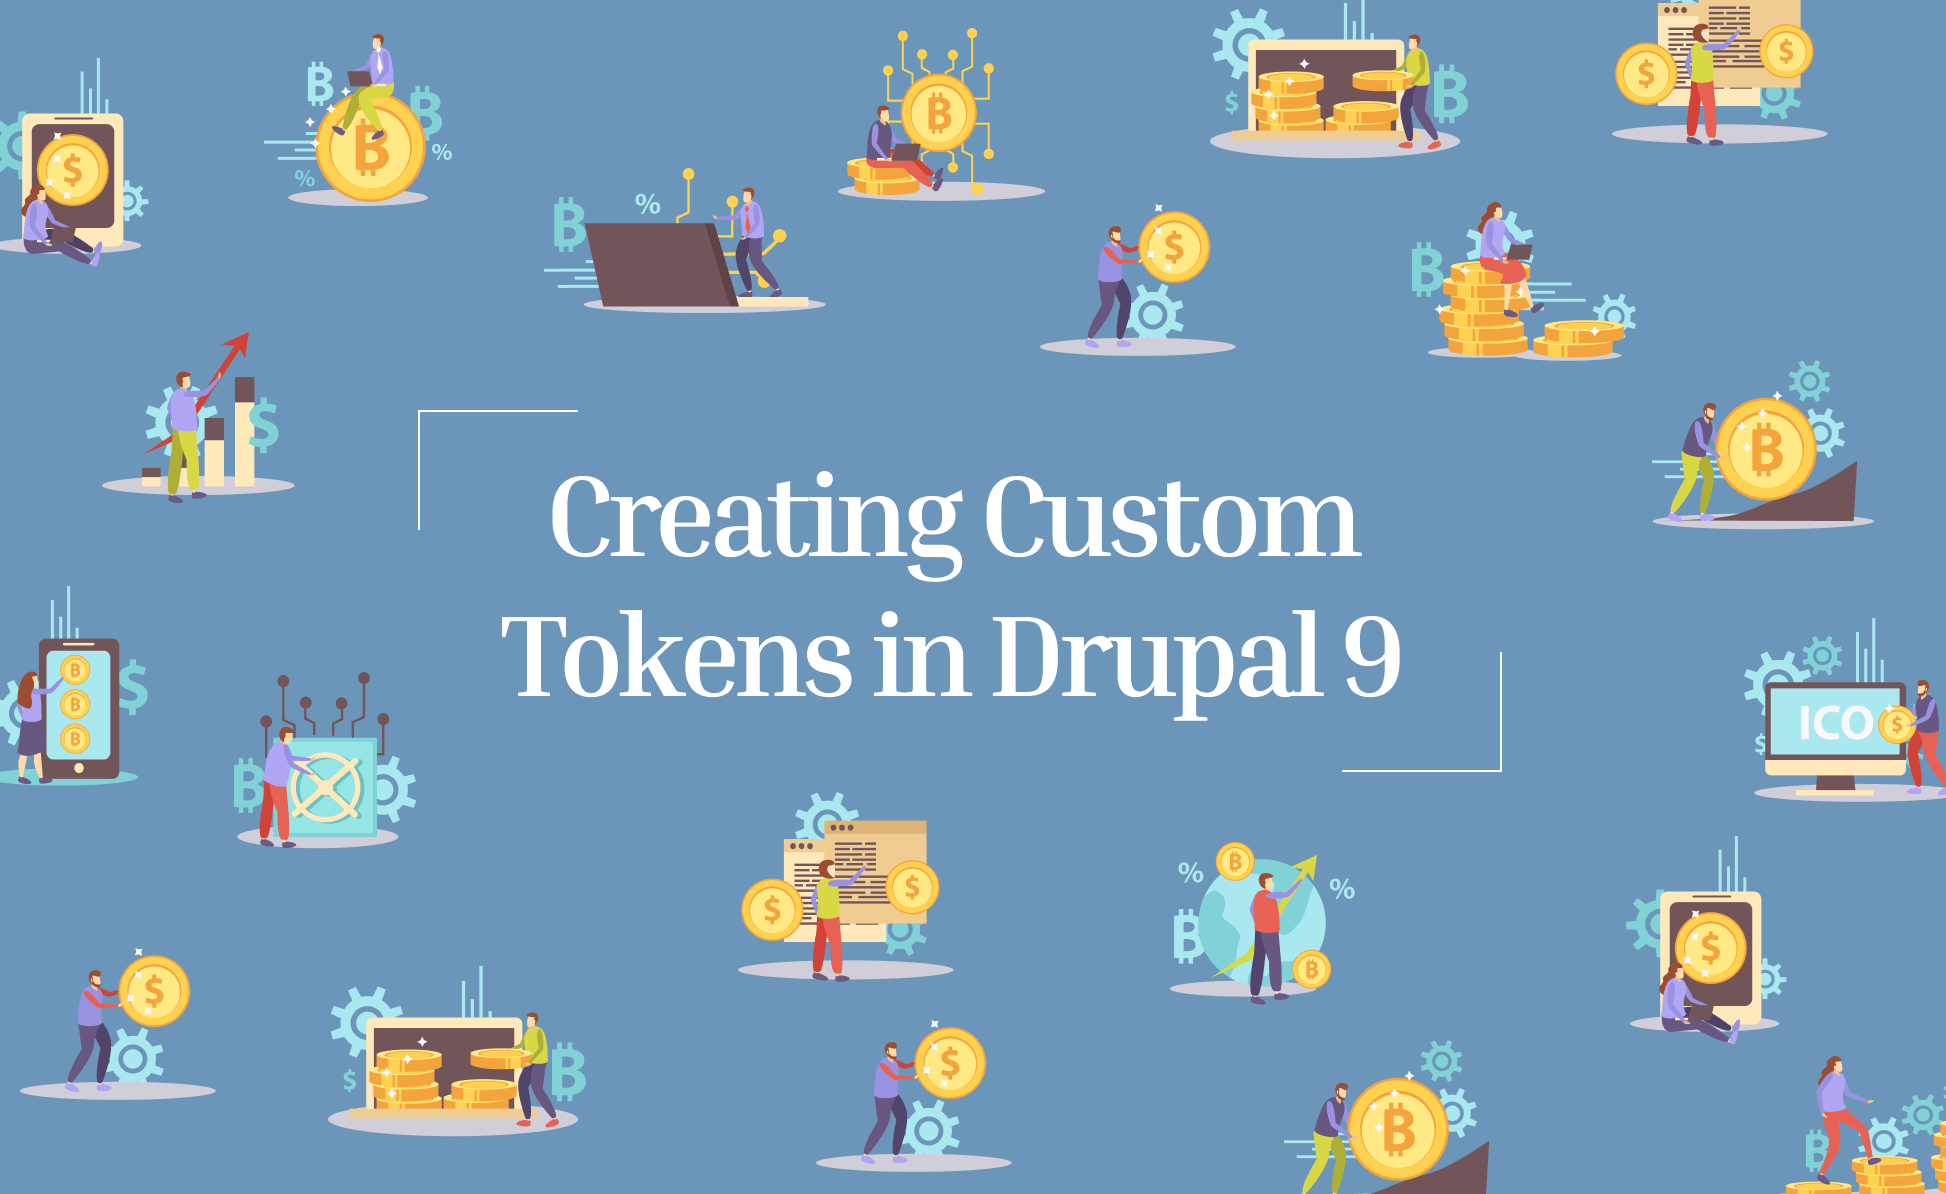 Creating Custom Tokens in Drupal 9